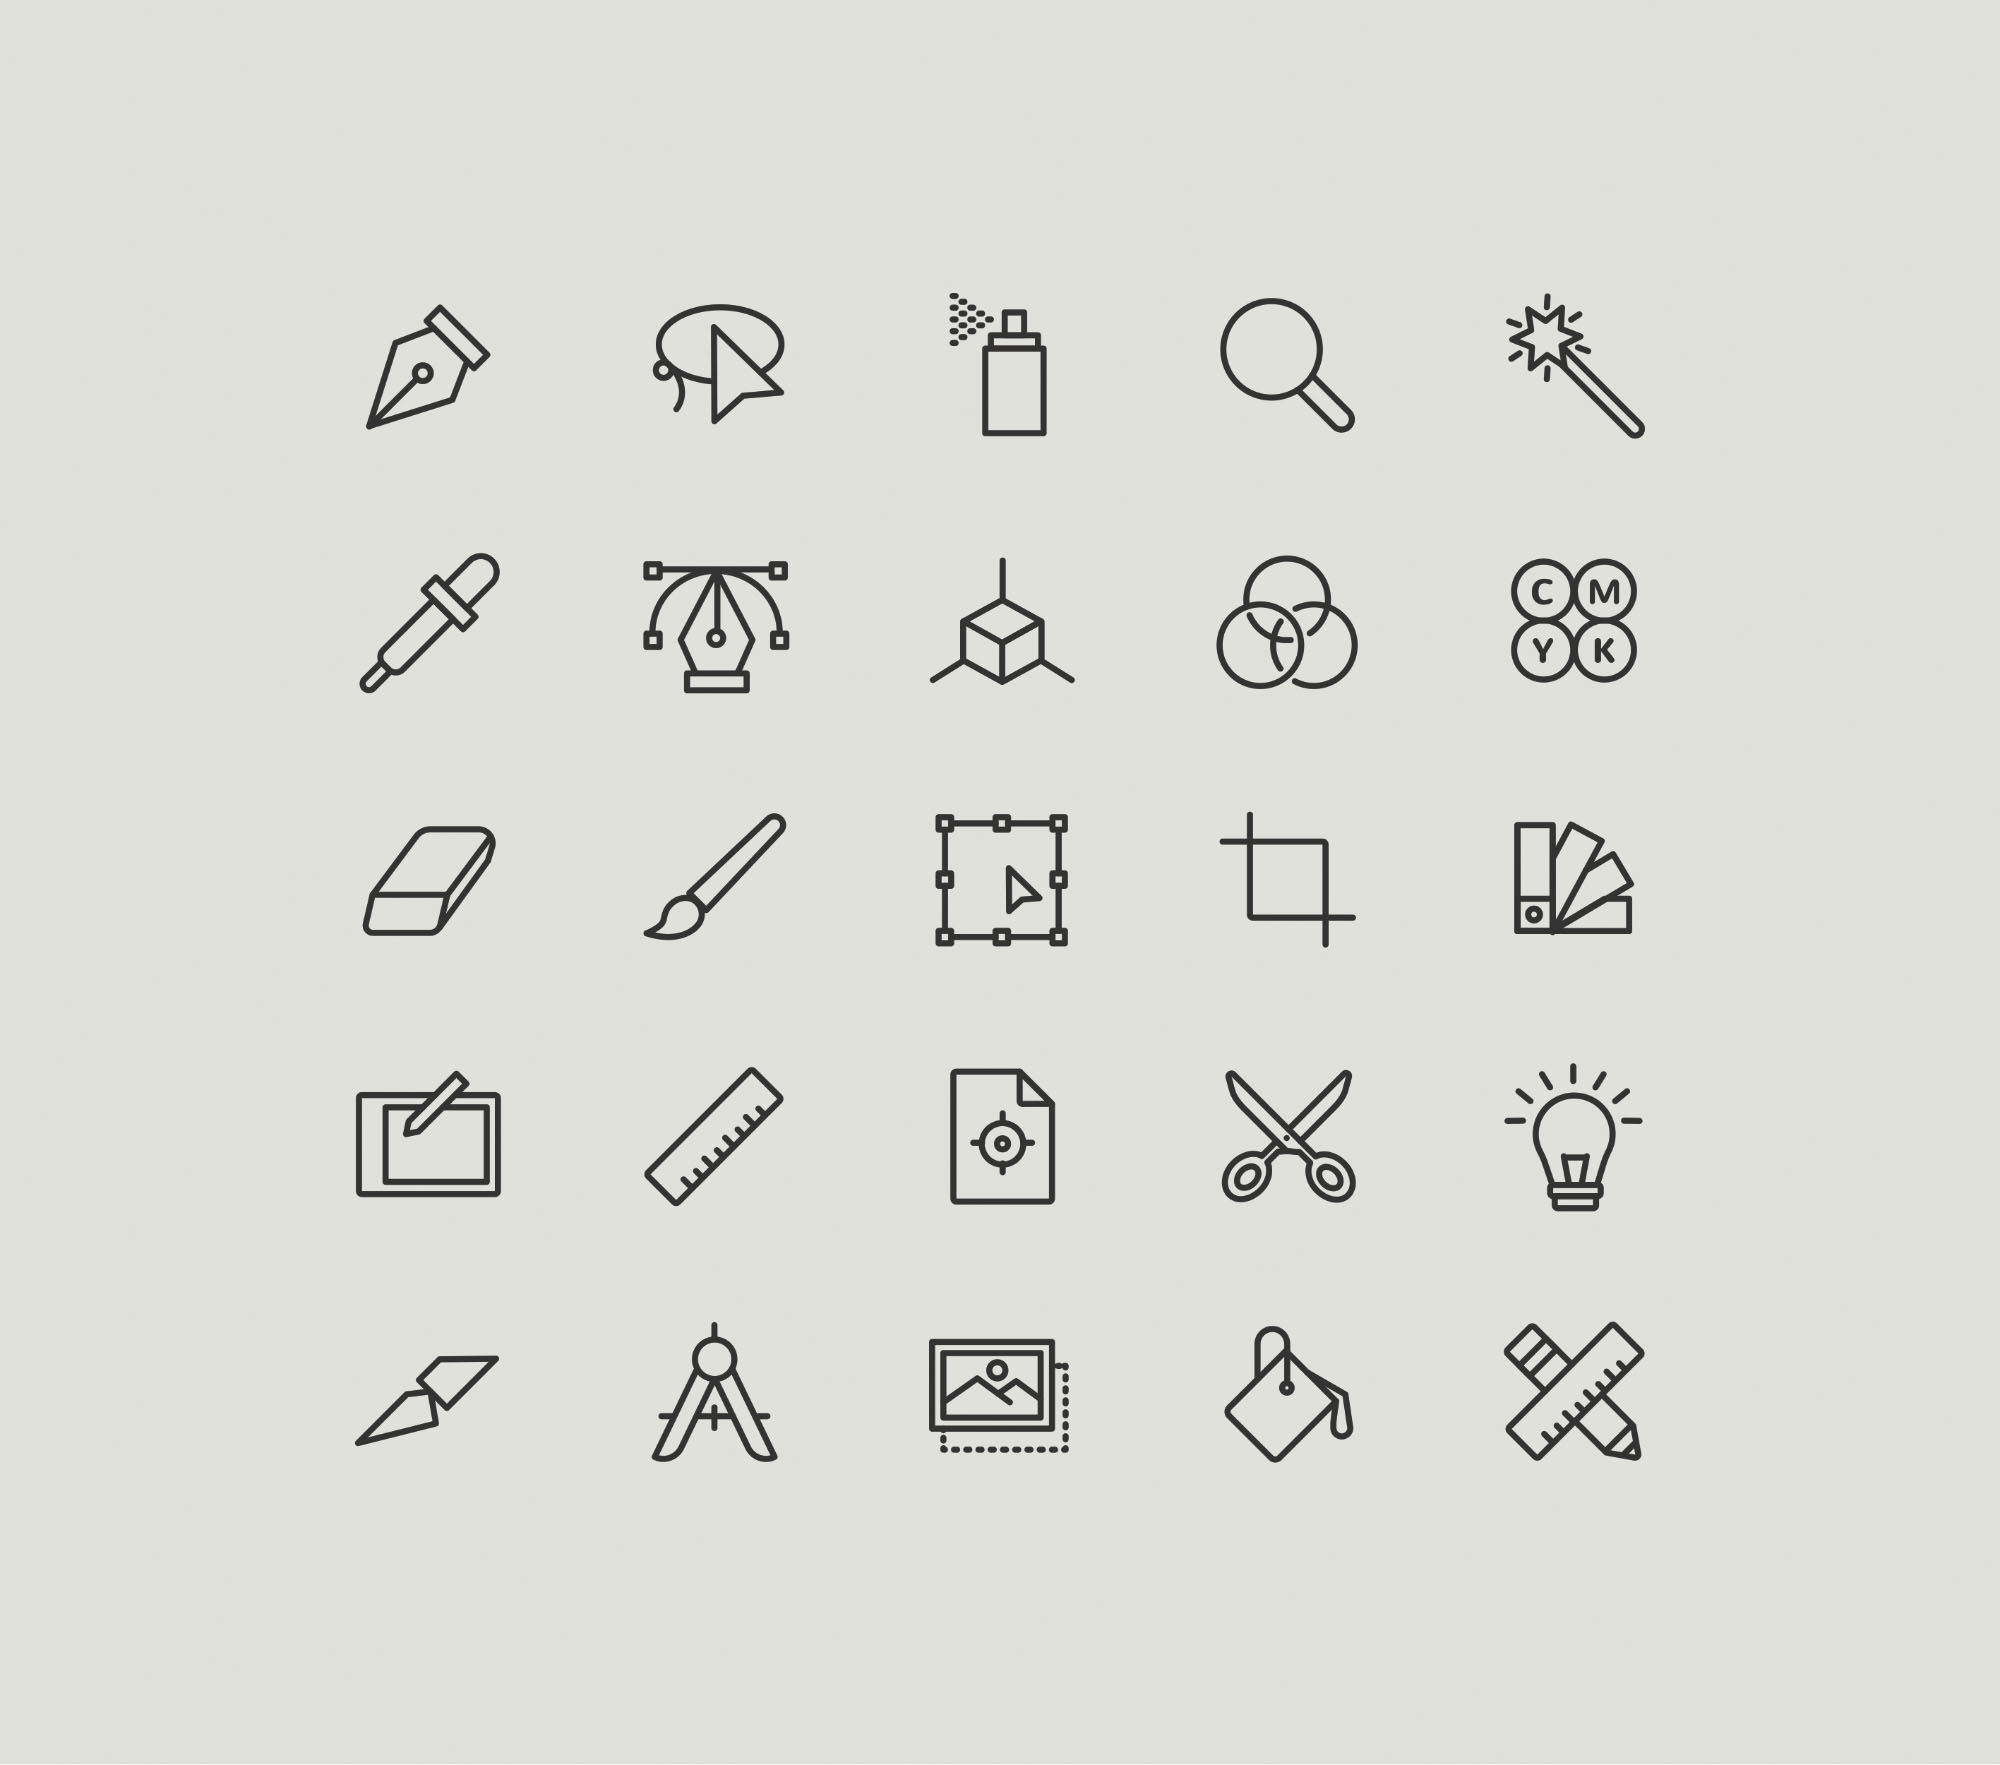 25枚简单图形设计矢量图标 25 simple graphic design icons